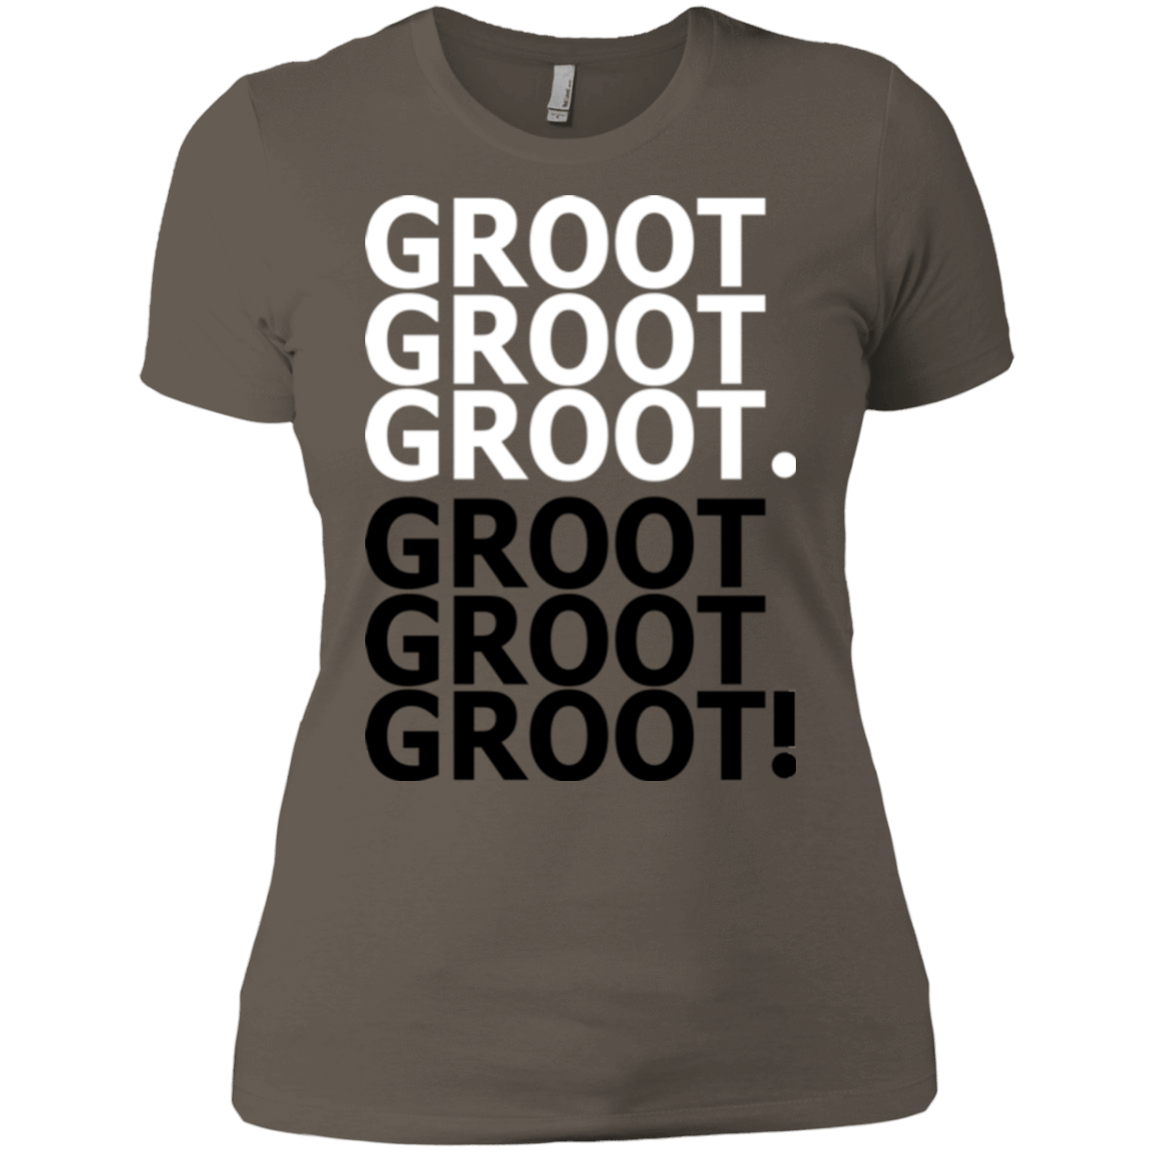 T-Shirts Warm Grey / X-Small Get over it Groot Women's Premium T-Shirt